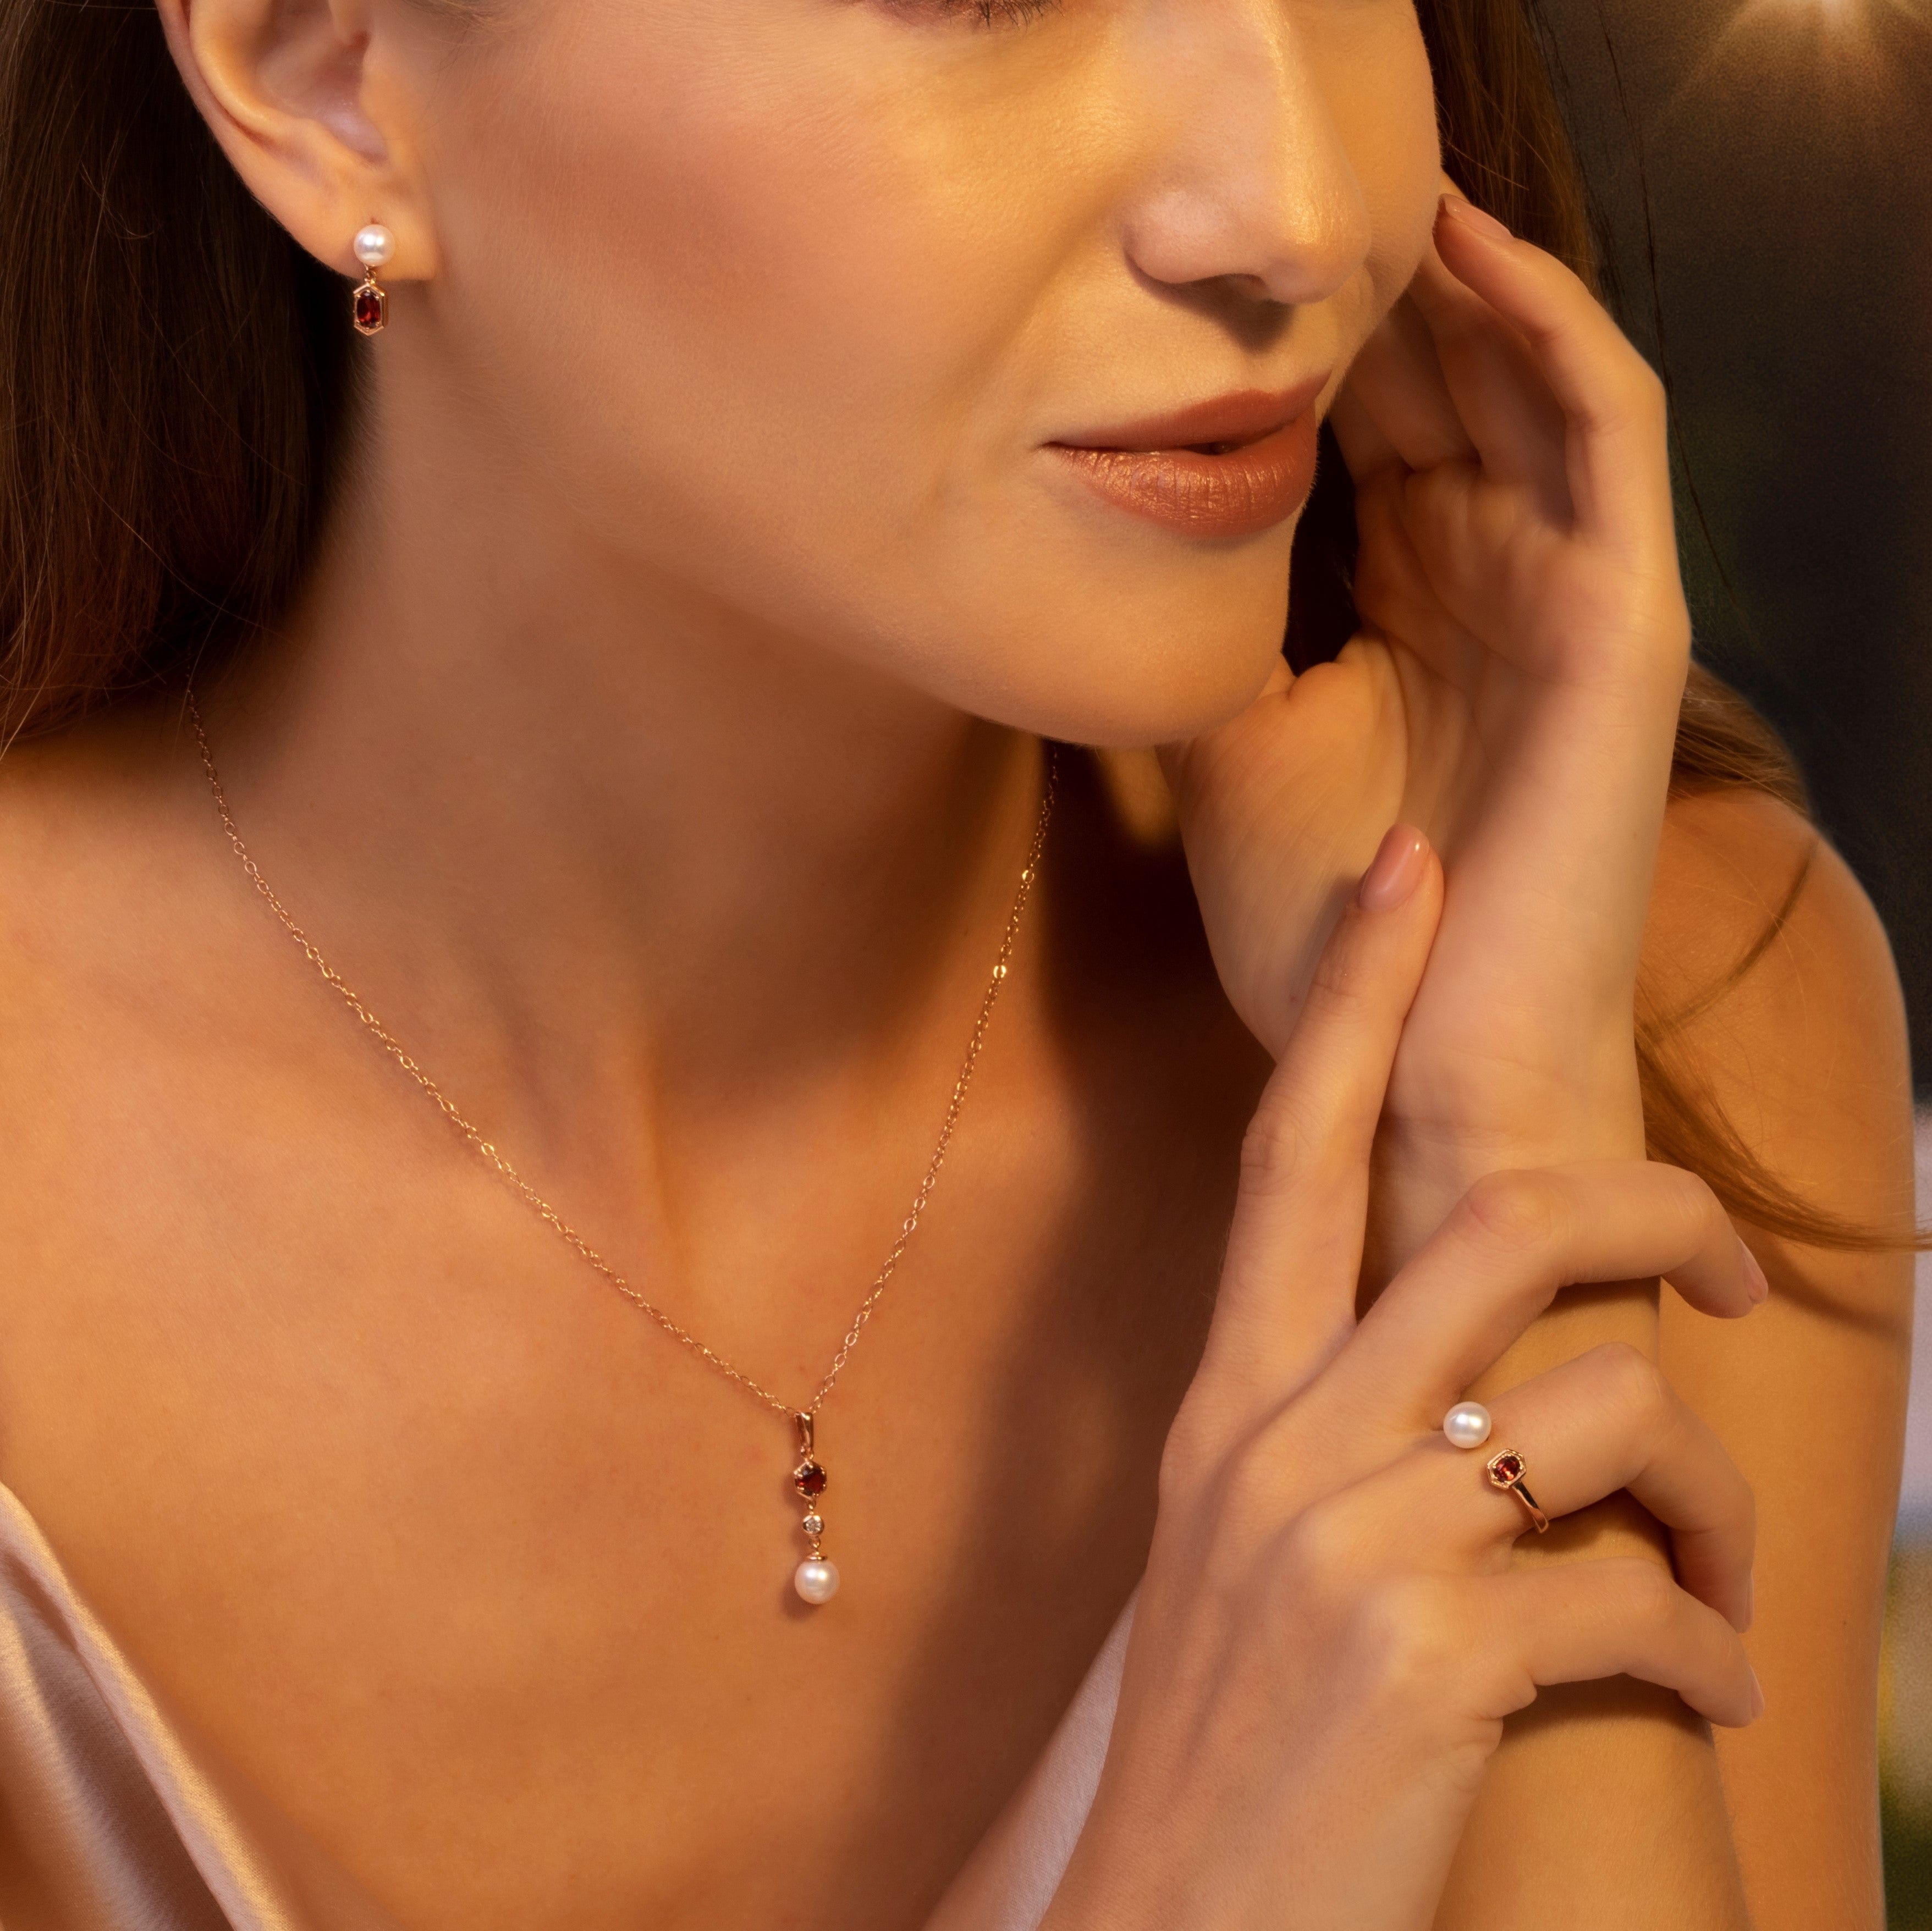 Modern Pearl & Garnet Mismatched Drop Earrings in Rose Gold Plated Silver - Gemondo